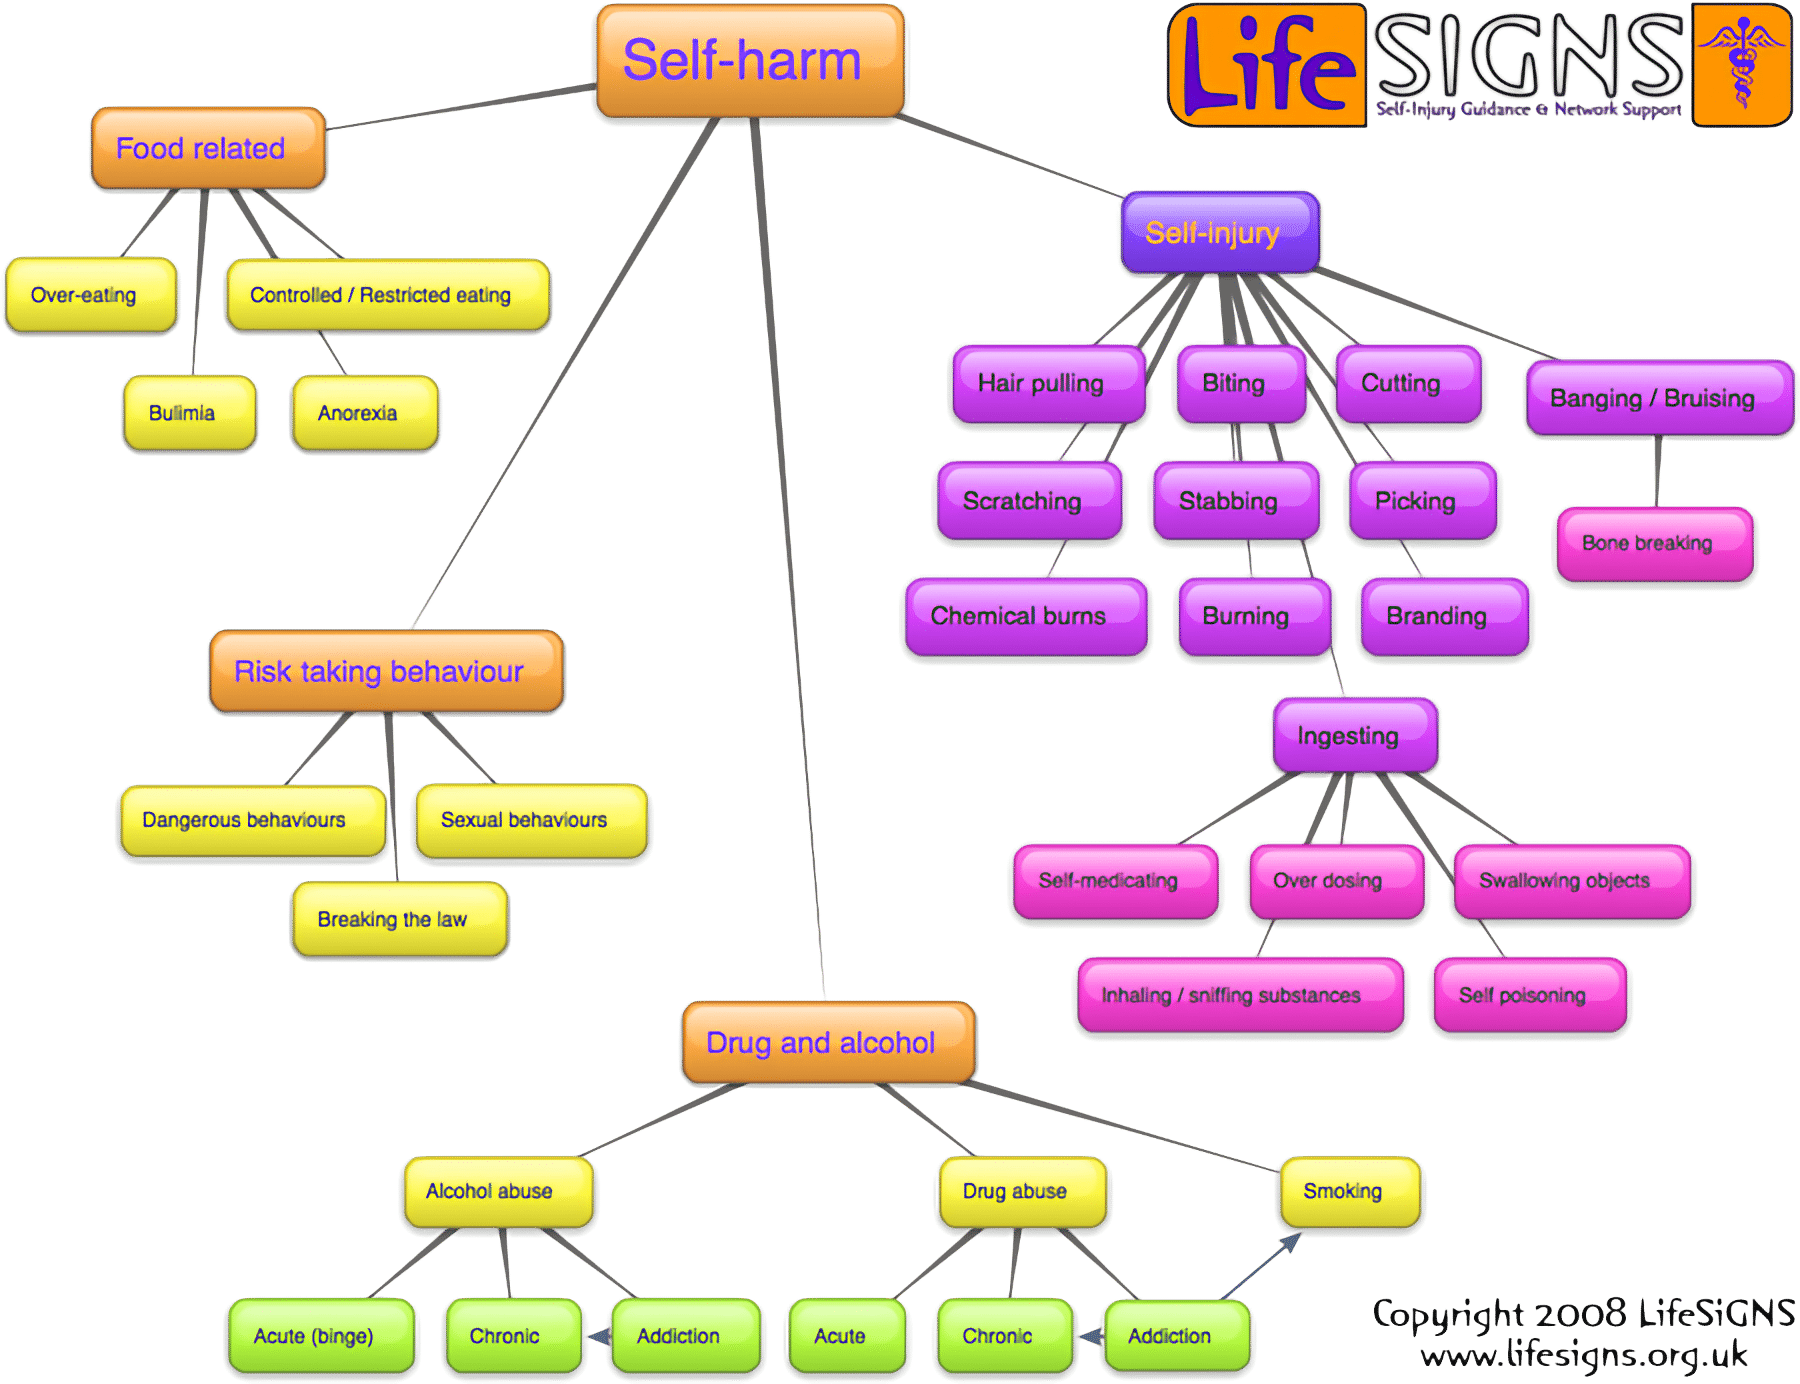  The LifeSIGNS self-harm map